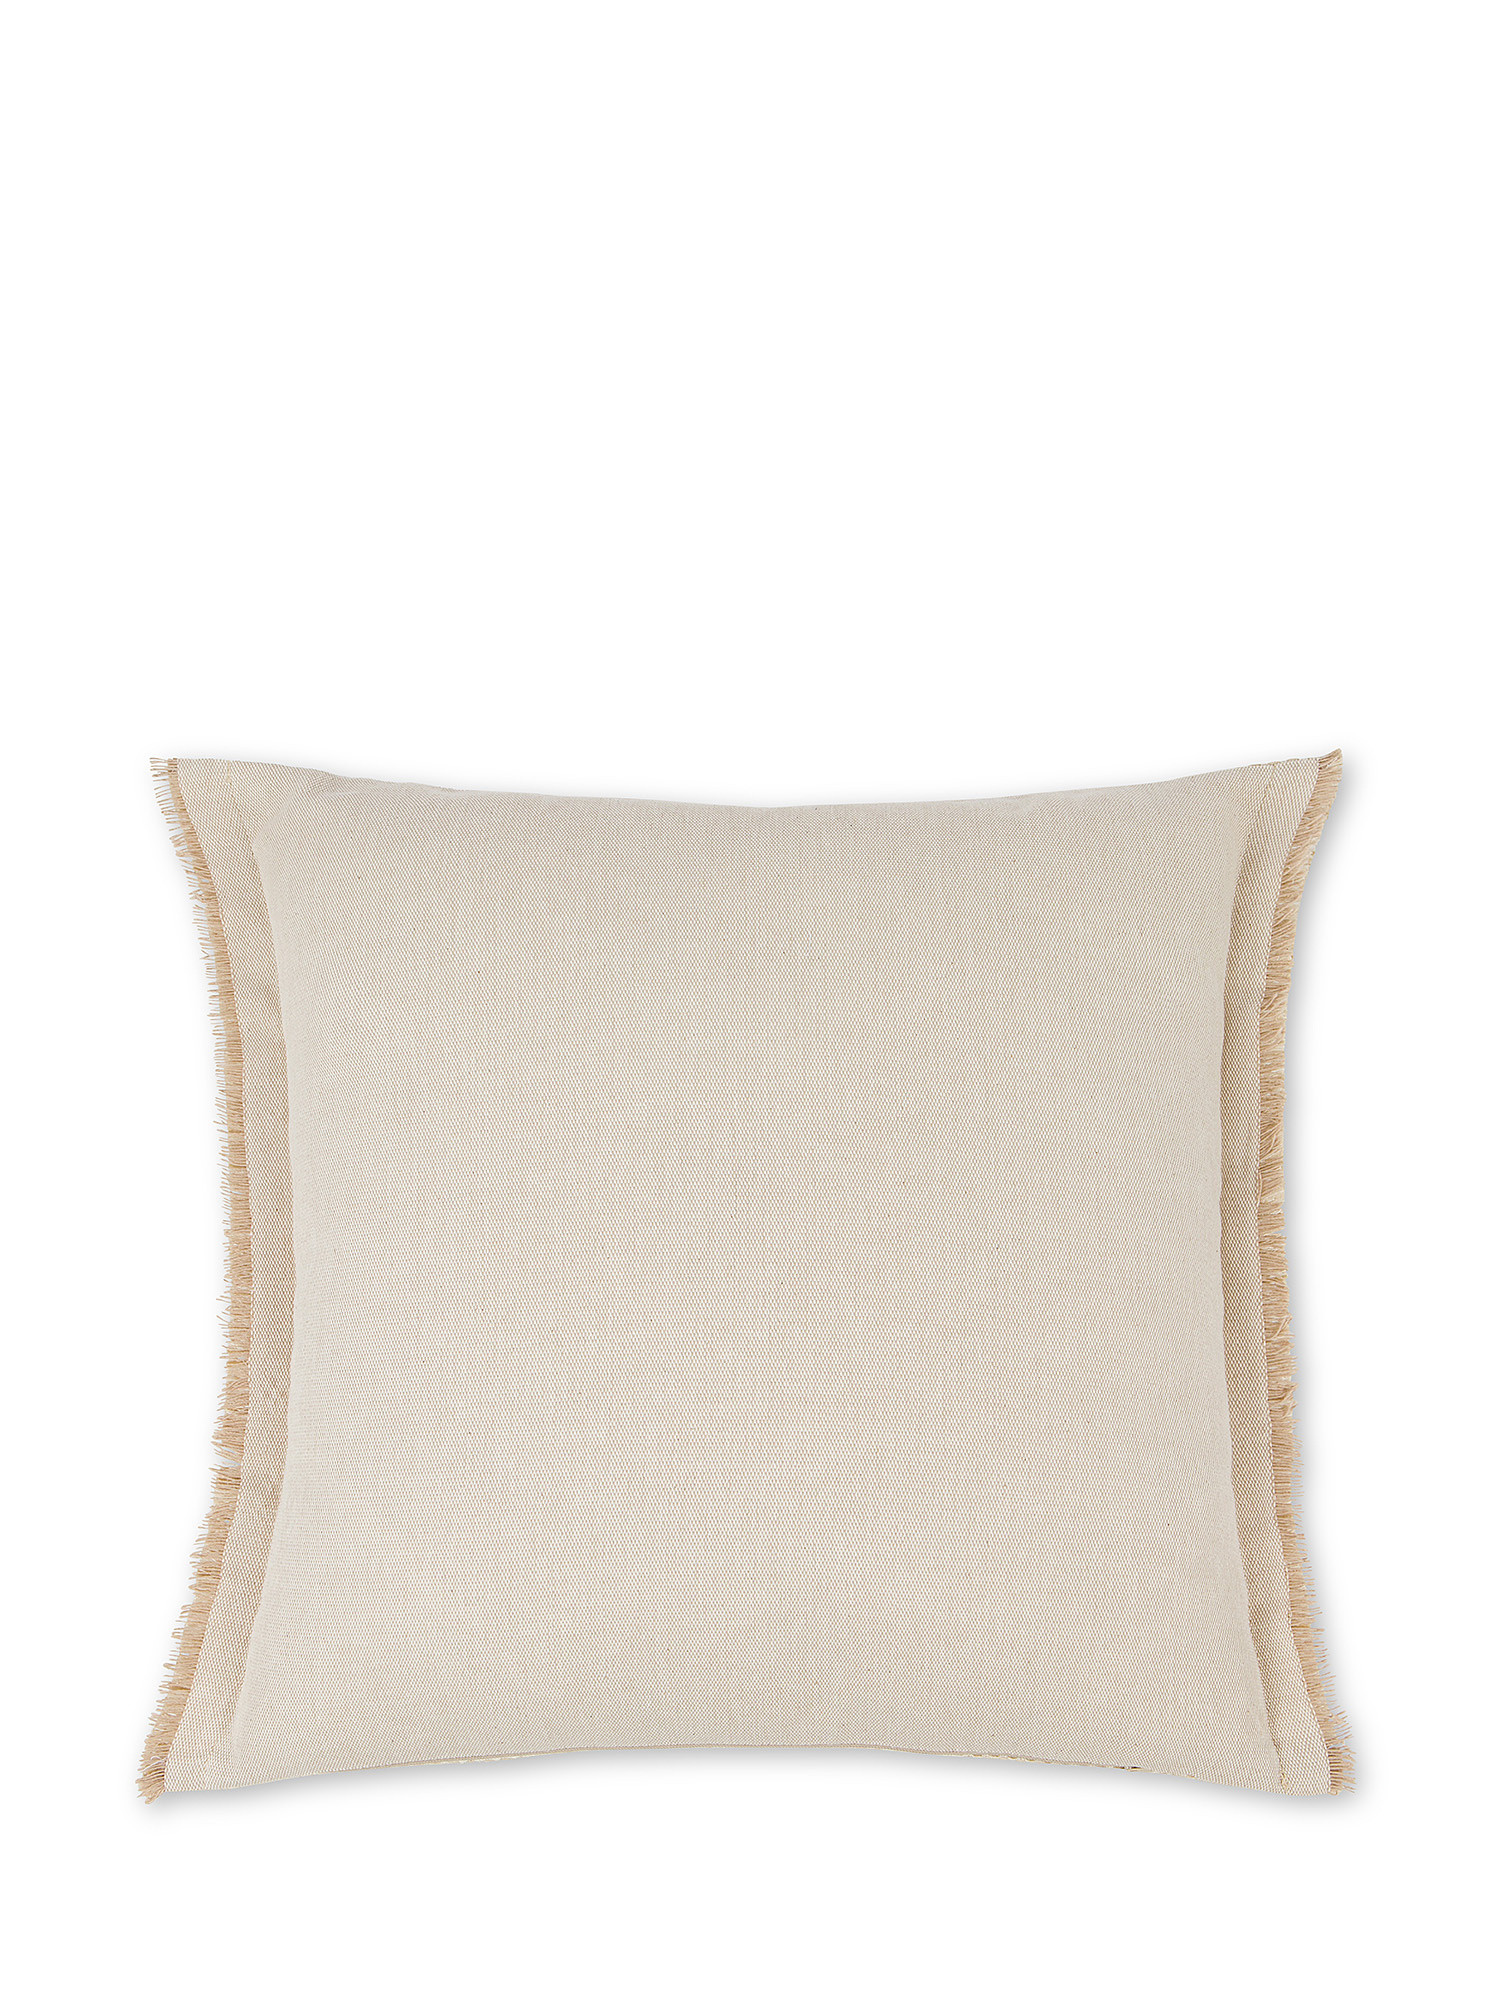 Cushion 45x45 cm with fringes, Beige, large image number 1